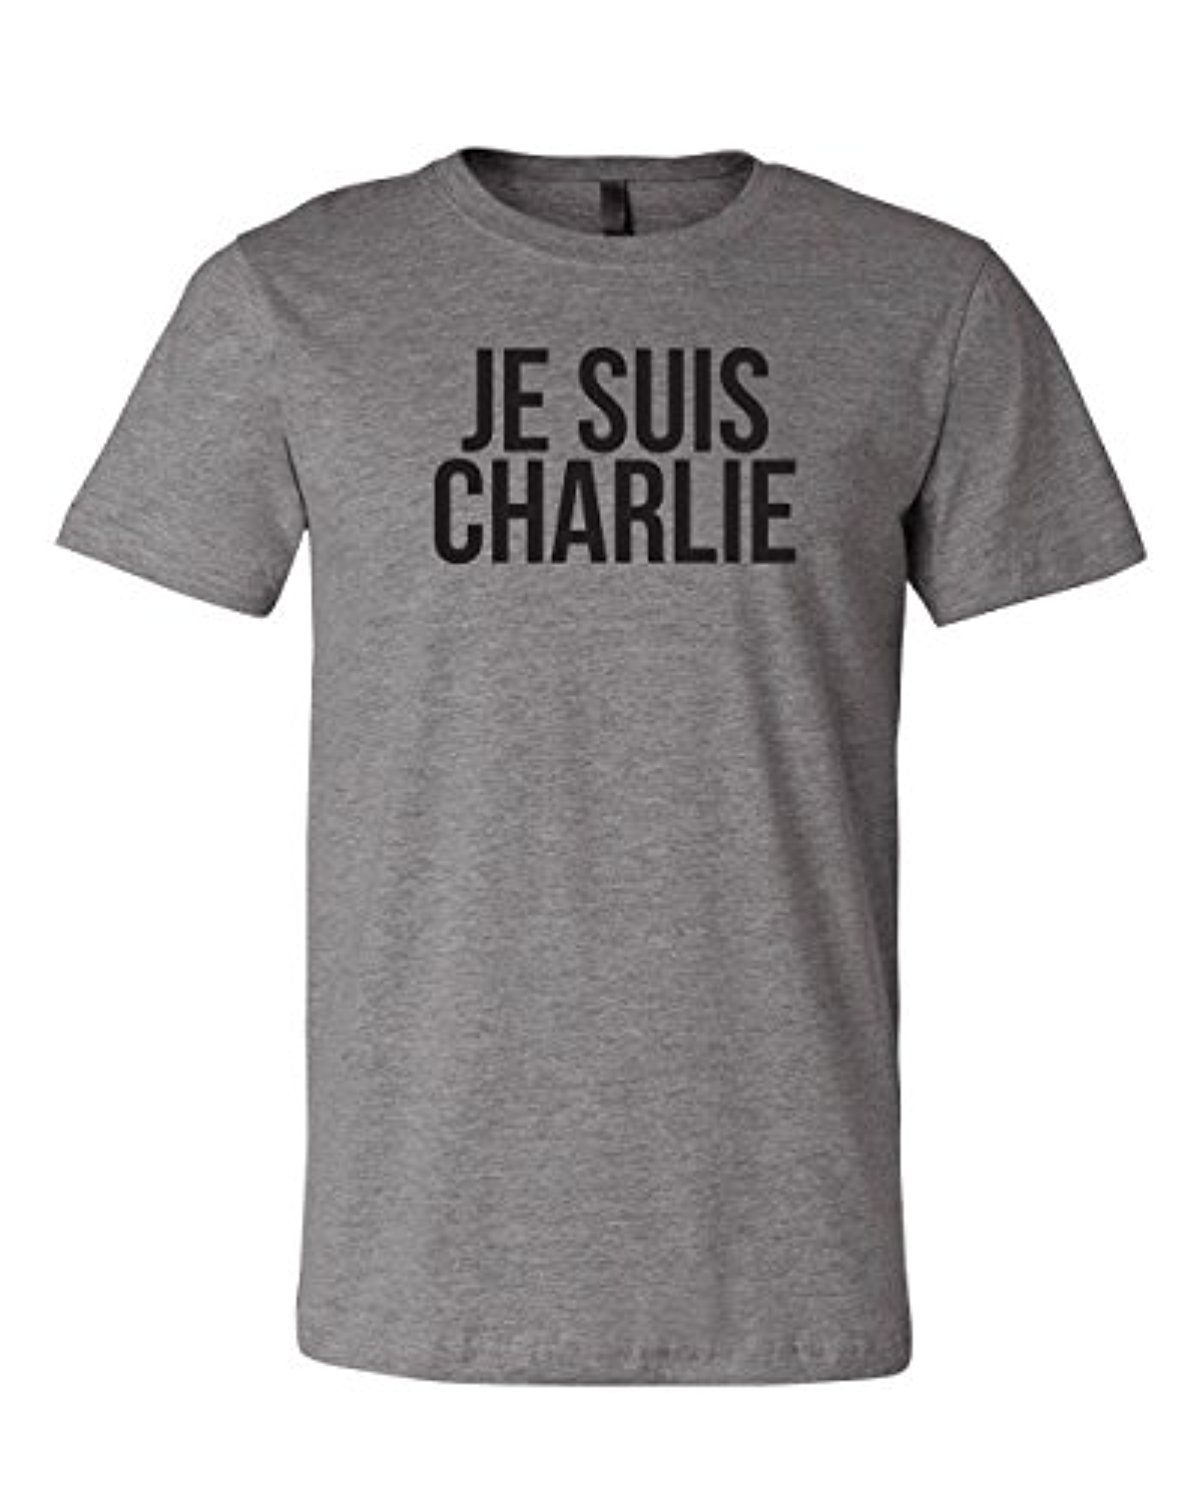 Charlie Hebdo Tee | Je Suis Charlie, I Am Charlie T-shirt | eBay